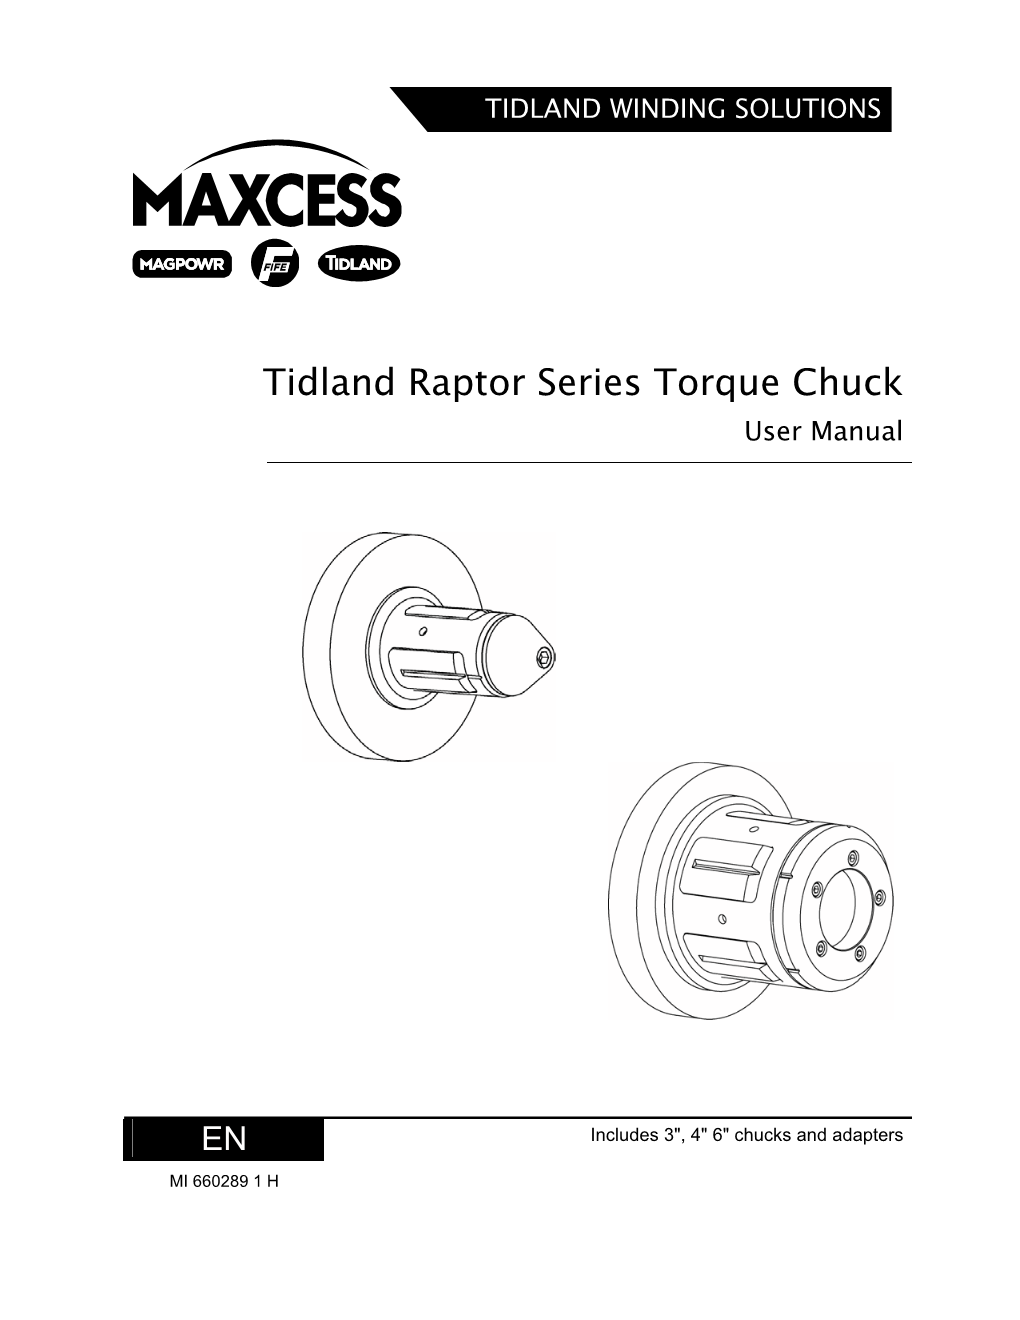 Raptor Torque Chuck User Manual: Tidland